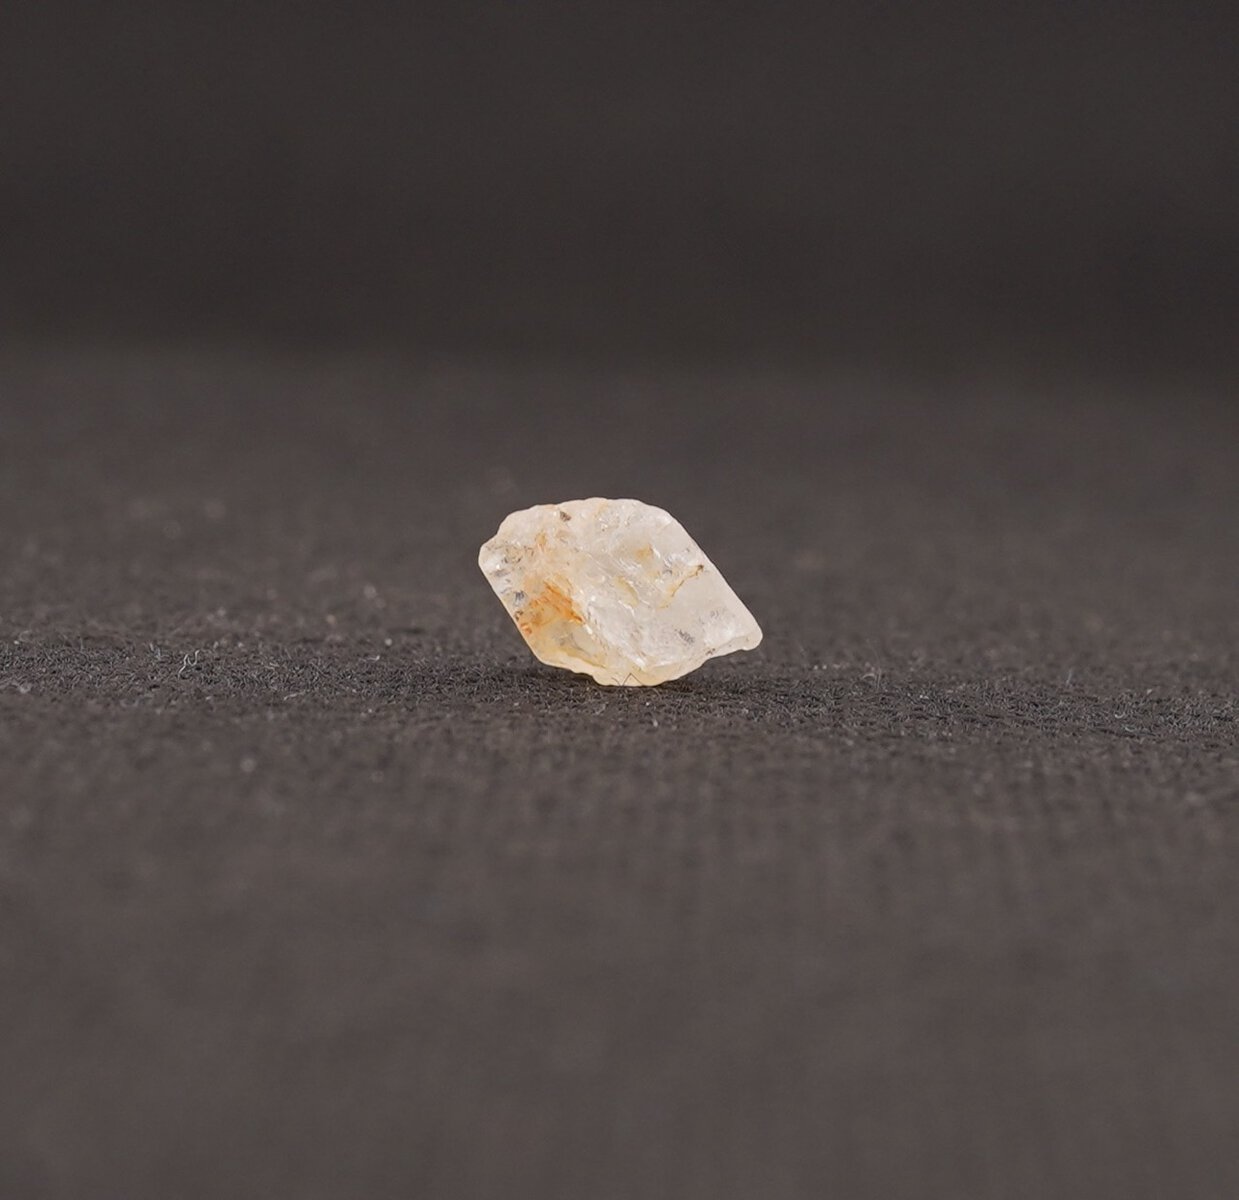 Fenacit nigerian cristal natural unicat f311